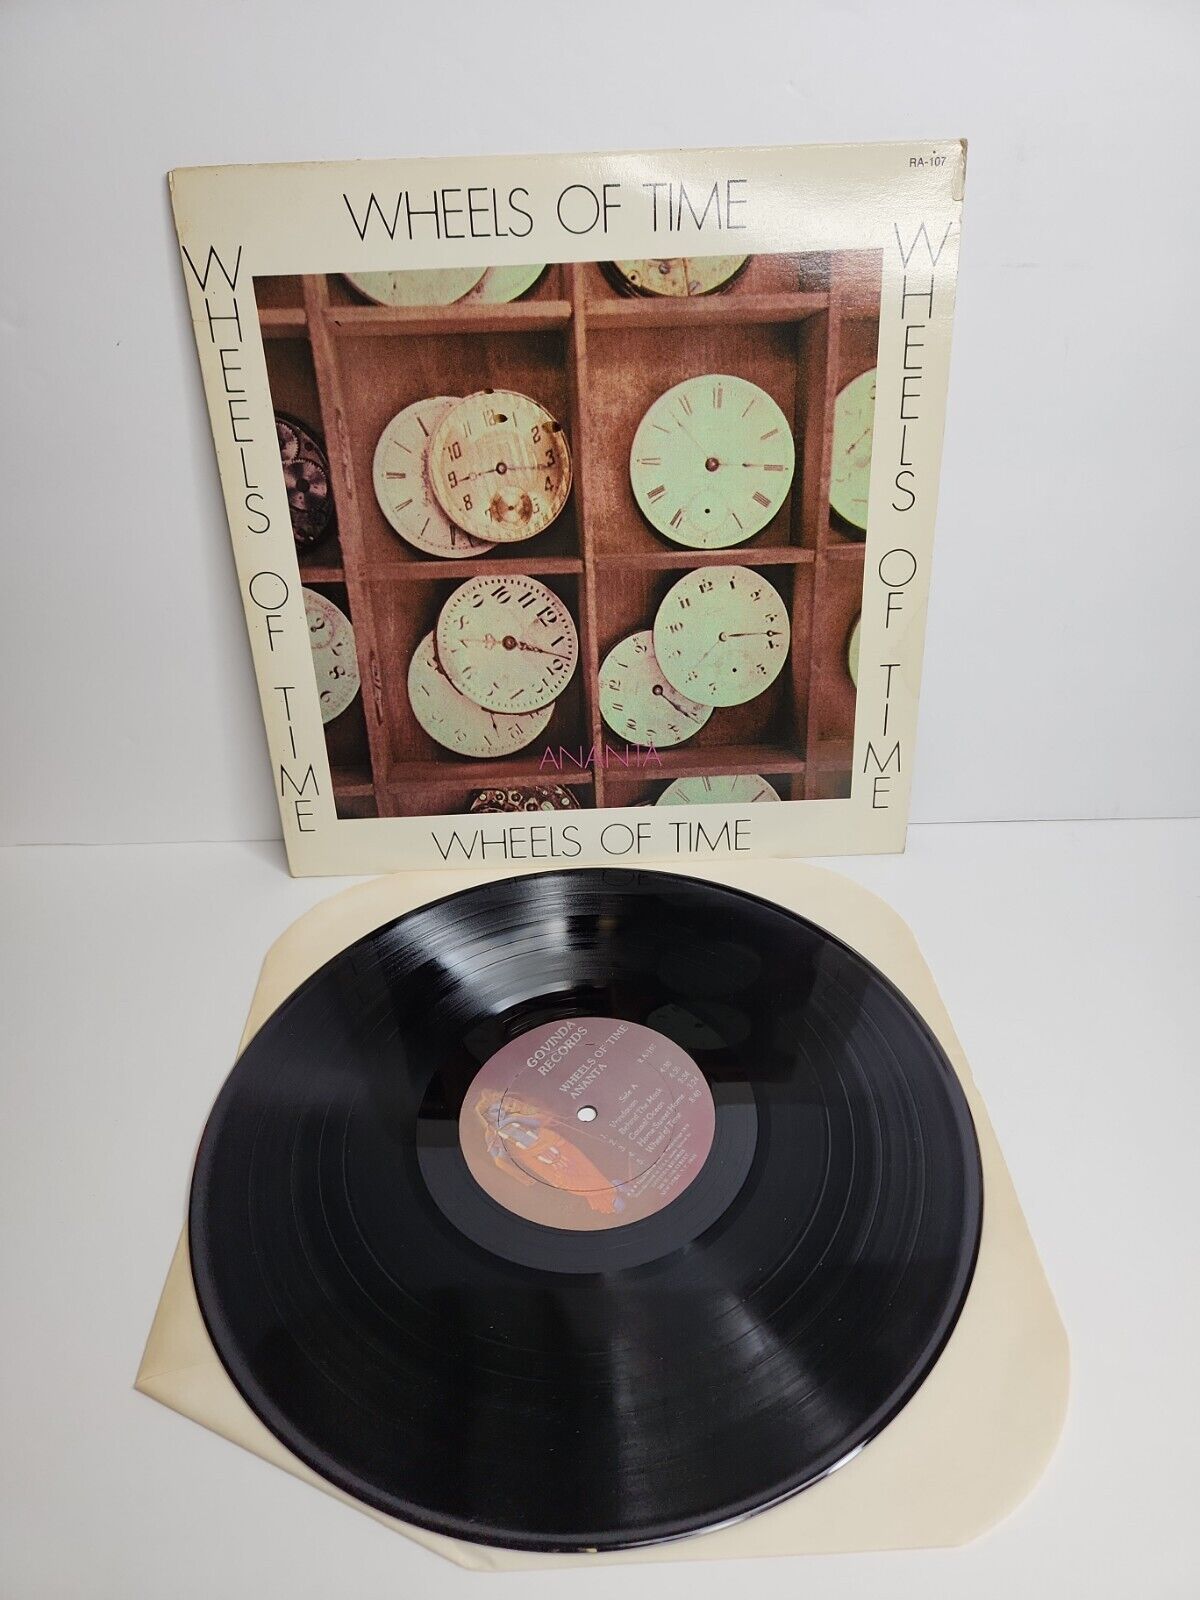 ANANTA, Wheels of Time, Vintage 1978 NMint LP, Govinda Ra-107, Rare Mystic Gift